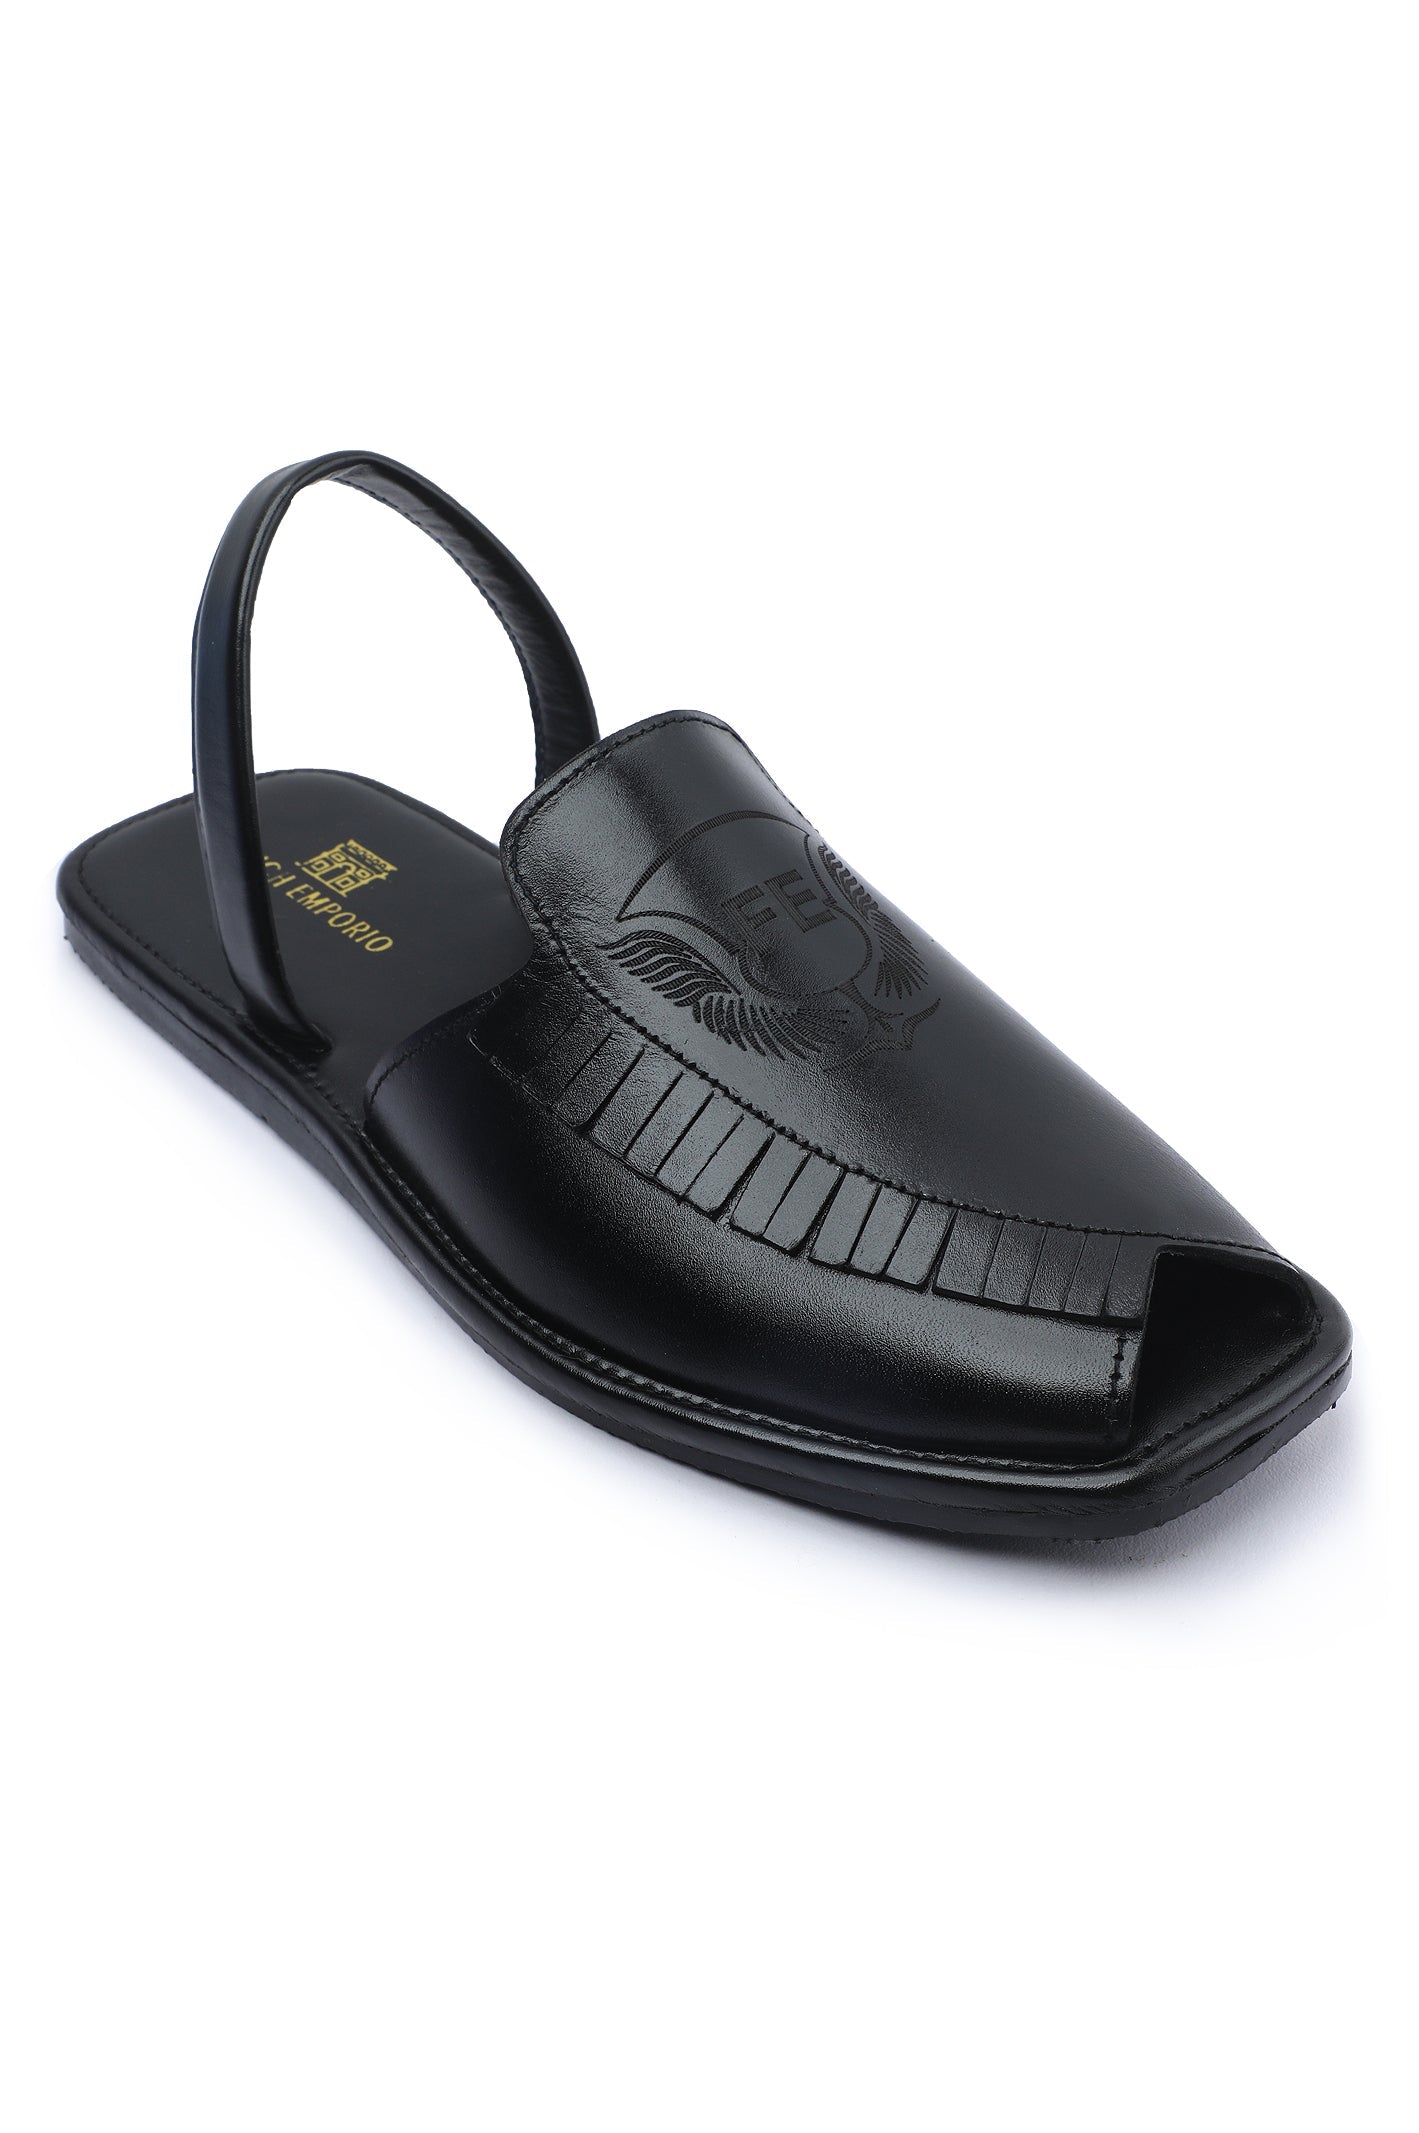 French Emporio Men's Sandal SKU: SLD-0038-BLACK - Diners